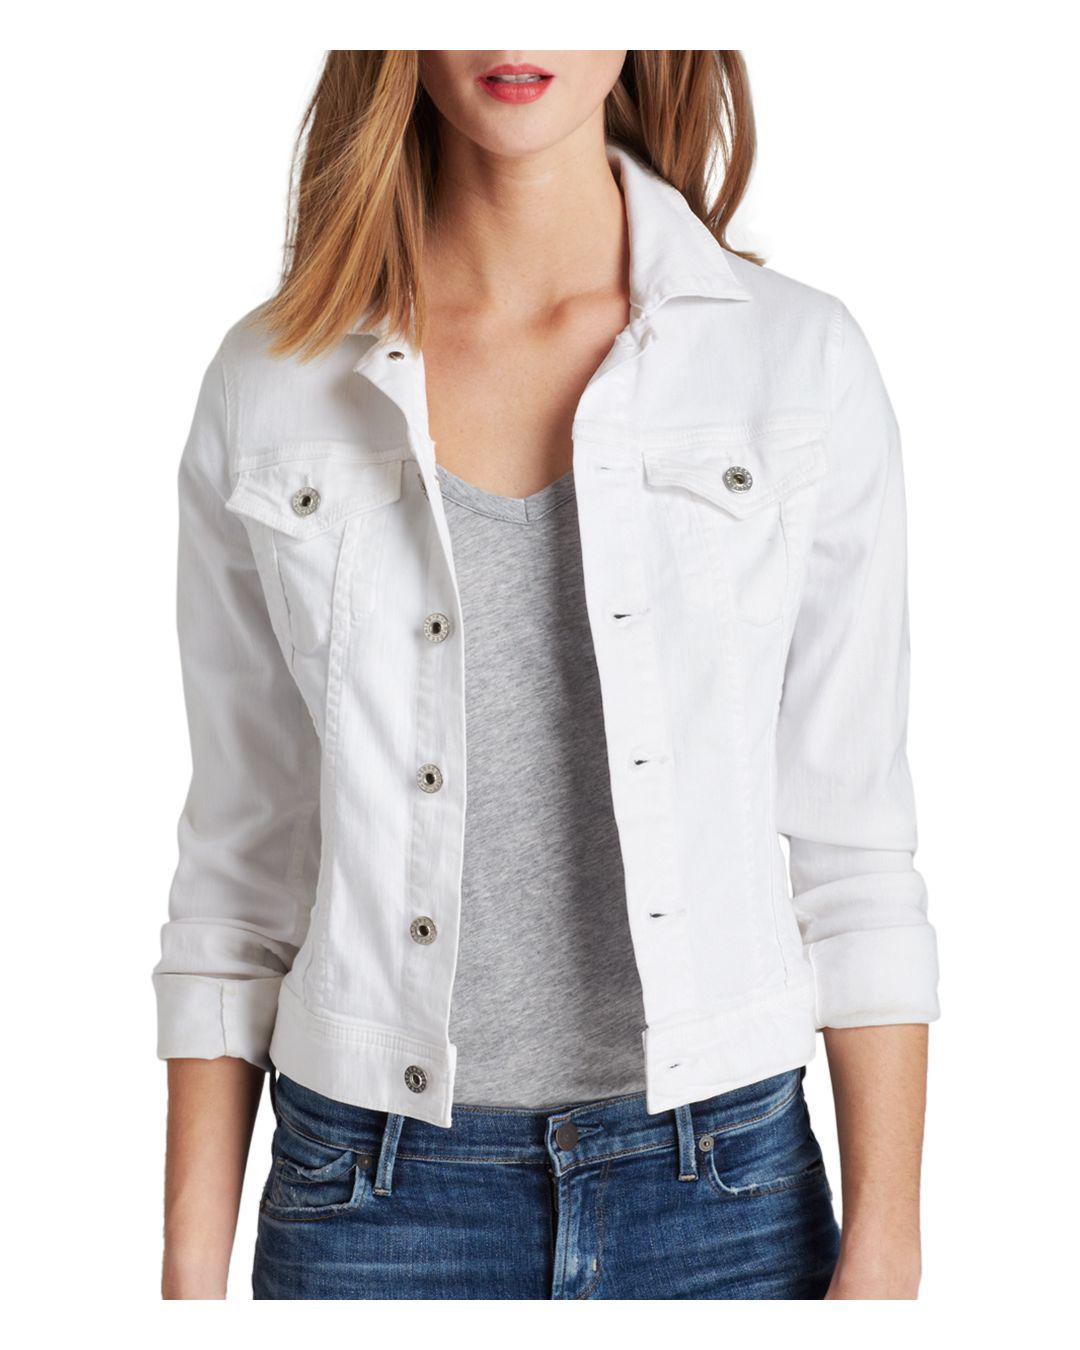 Lyst - AG Jeans Jacket - Robyn Denim in White